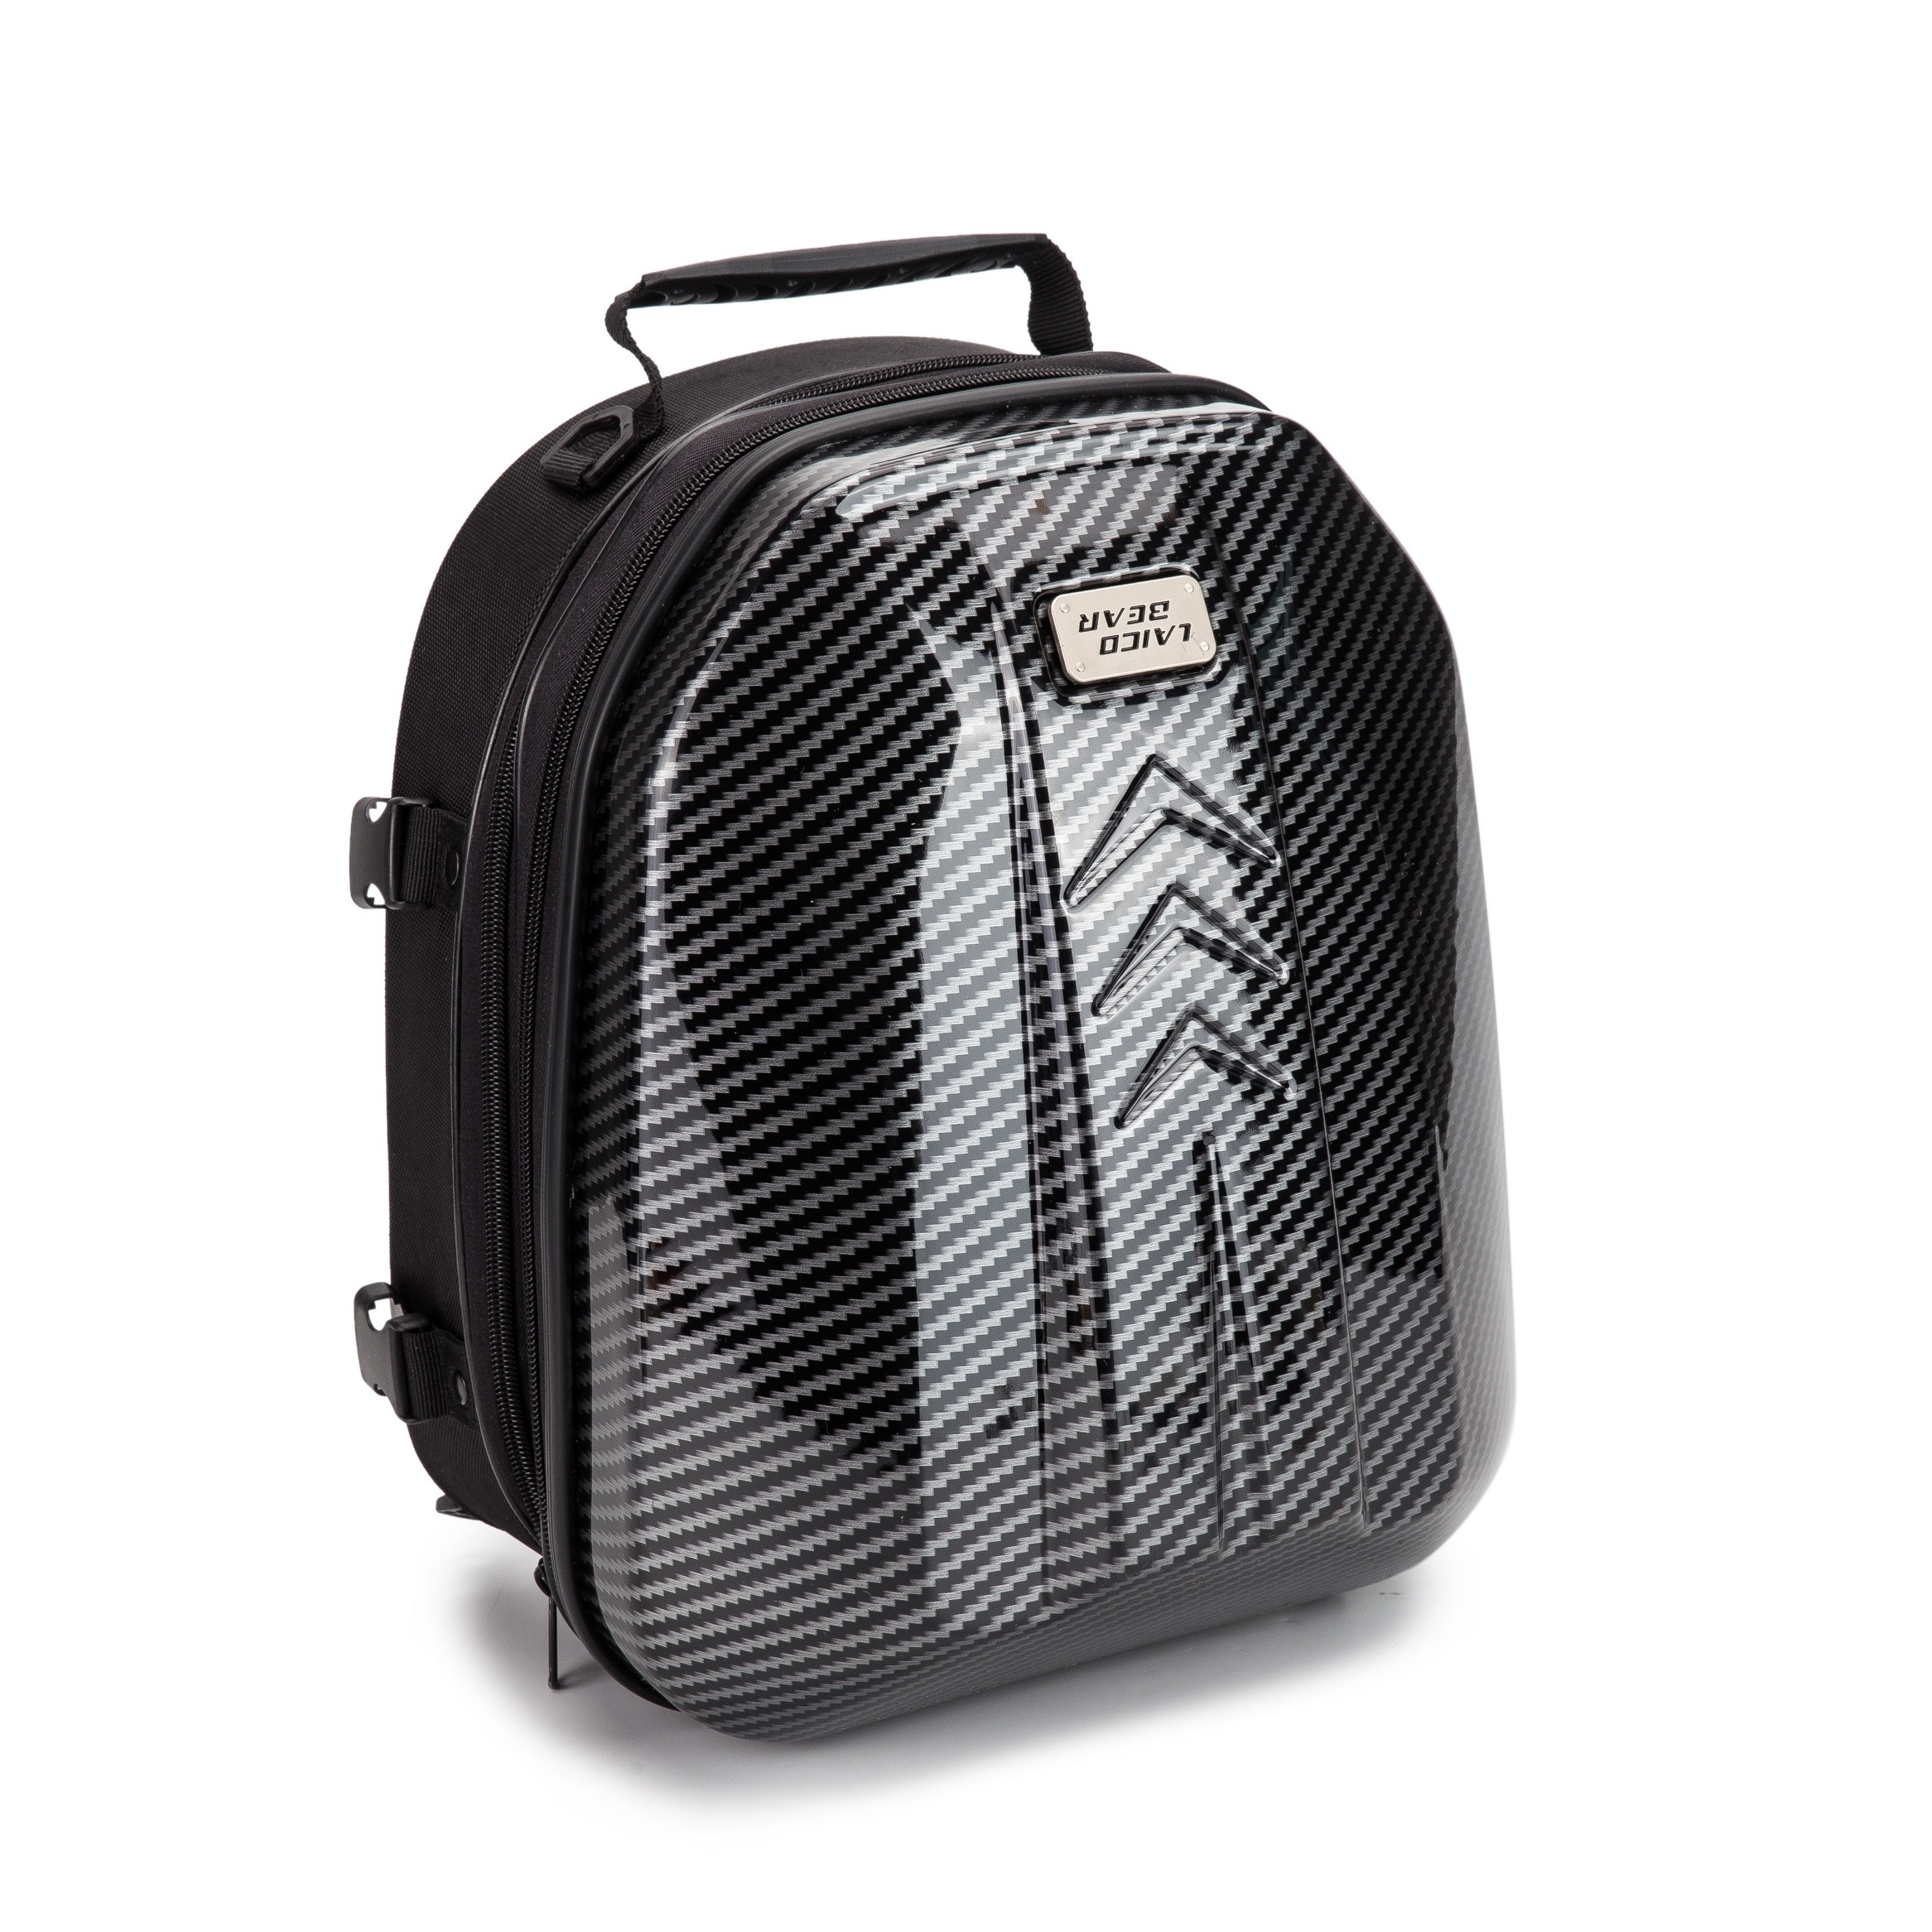 Motorcycle Tail Bag Back Seat Storage Carry Hand Shoulder Waterproof Saddle Bag, Adult Unisex, Size: 1XL